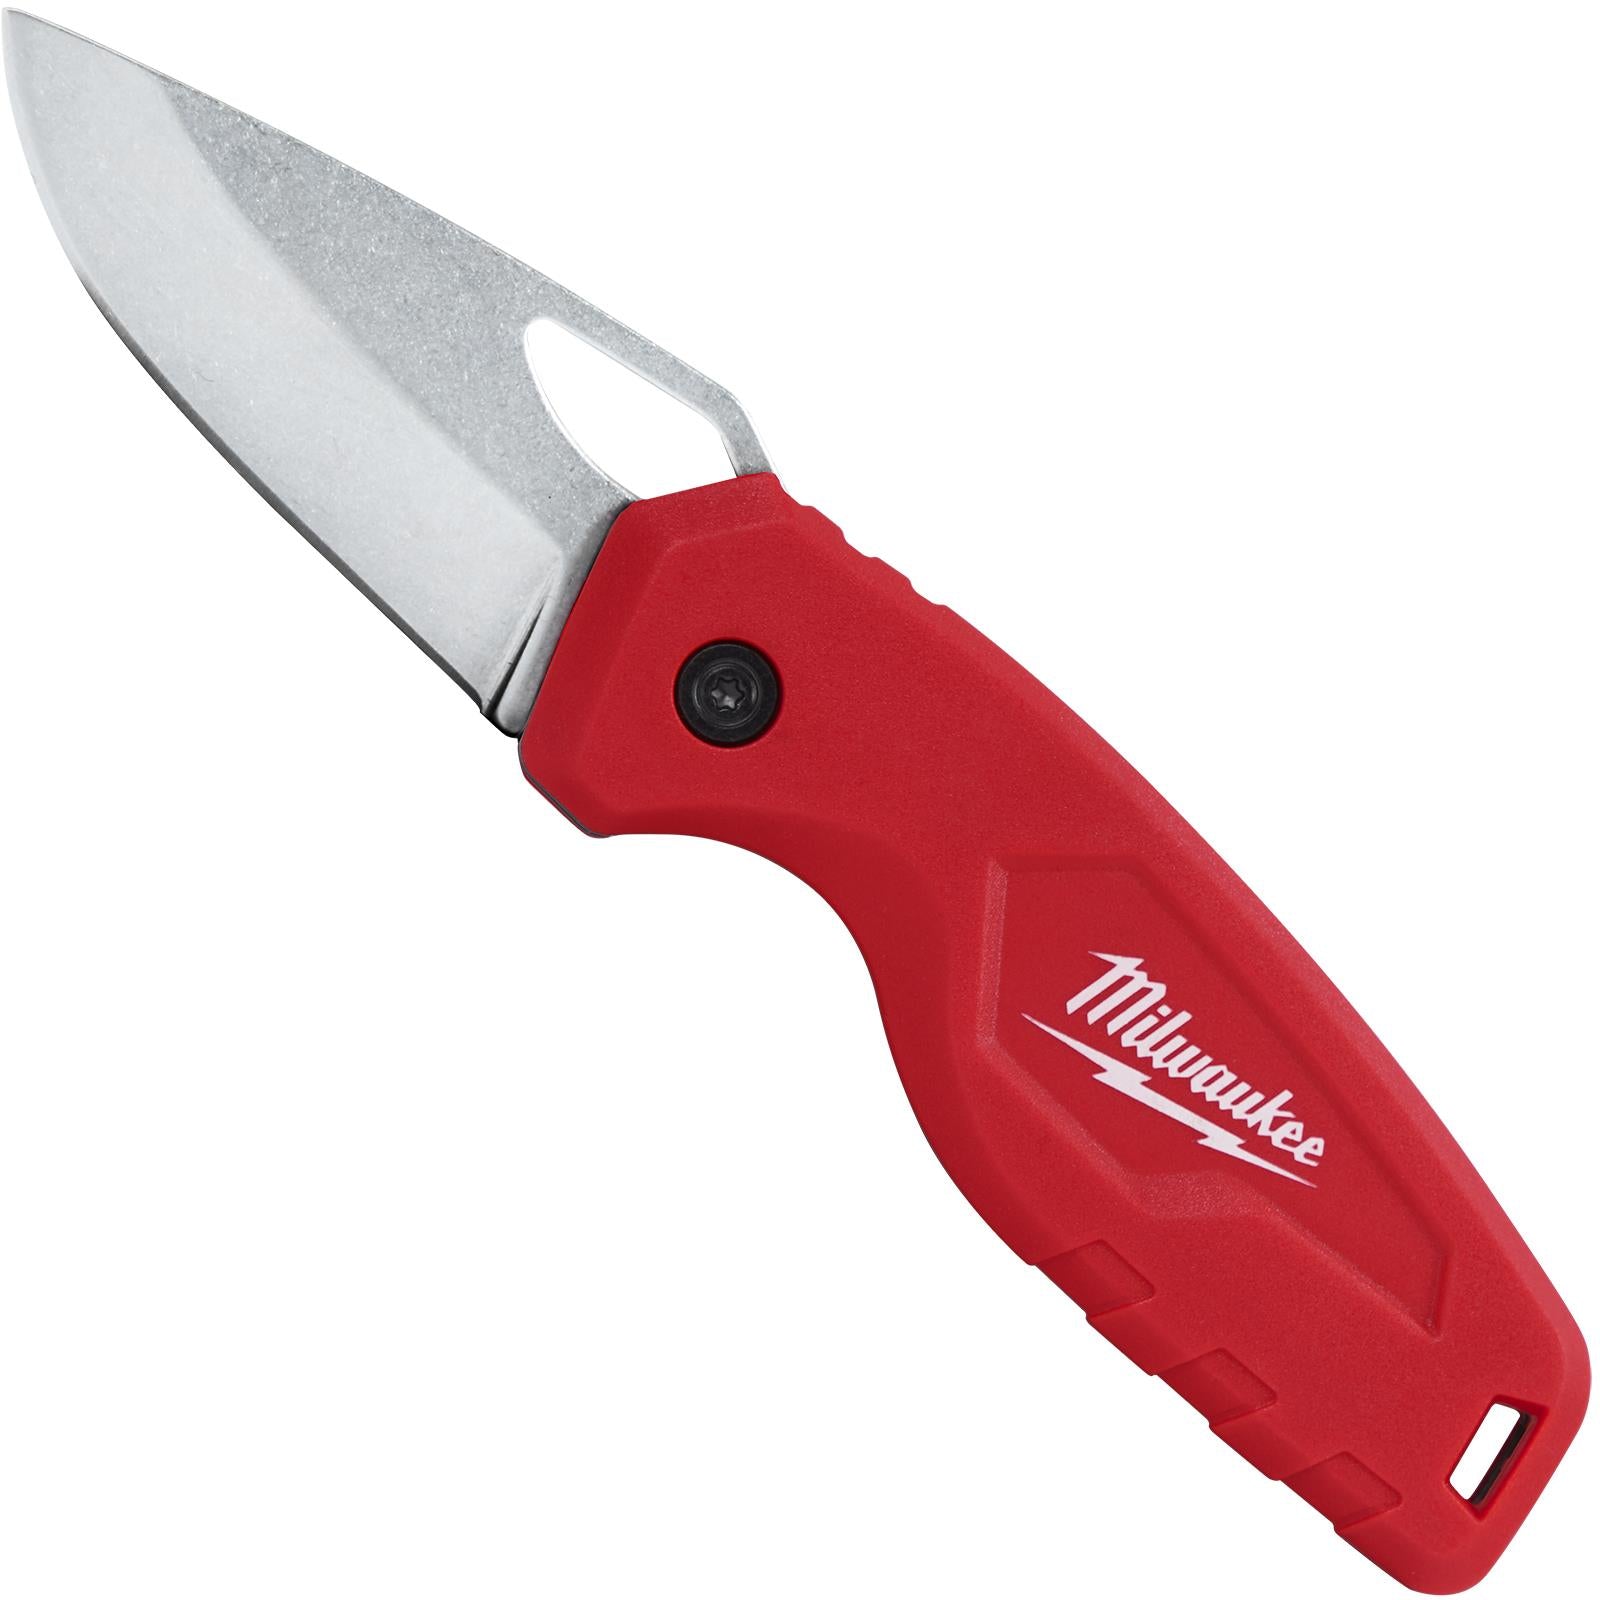 Milwaukee Compact Pocket Knife Cutting Blade